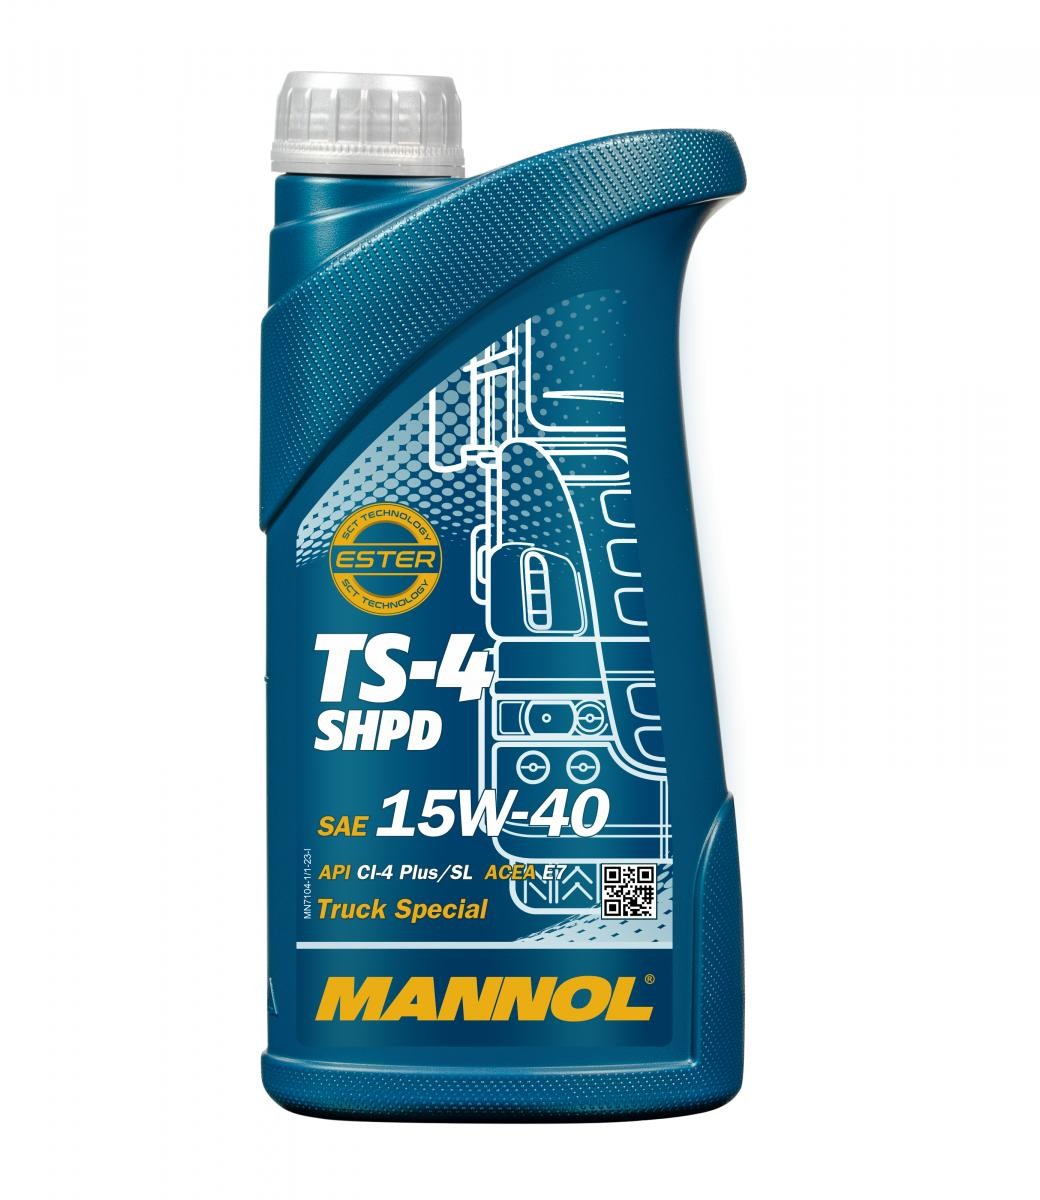 Engine oil API CI-4 MANNOL - MN7104-1 TS-4, SHPD